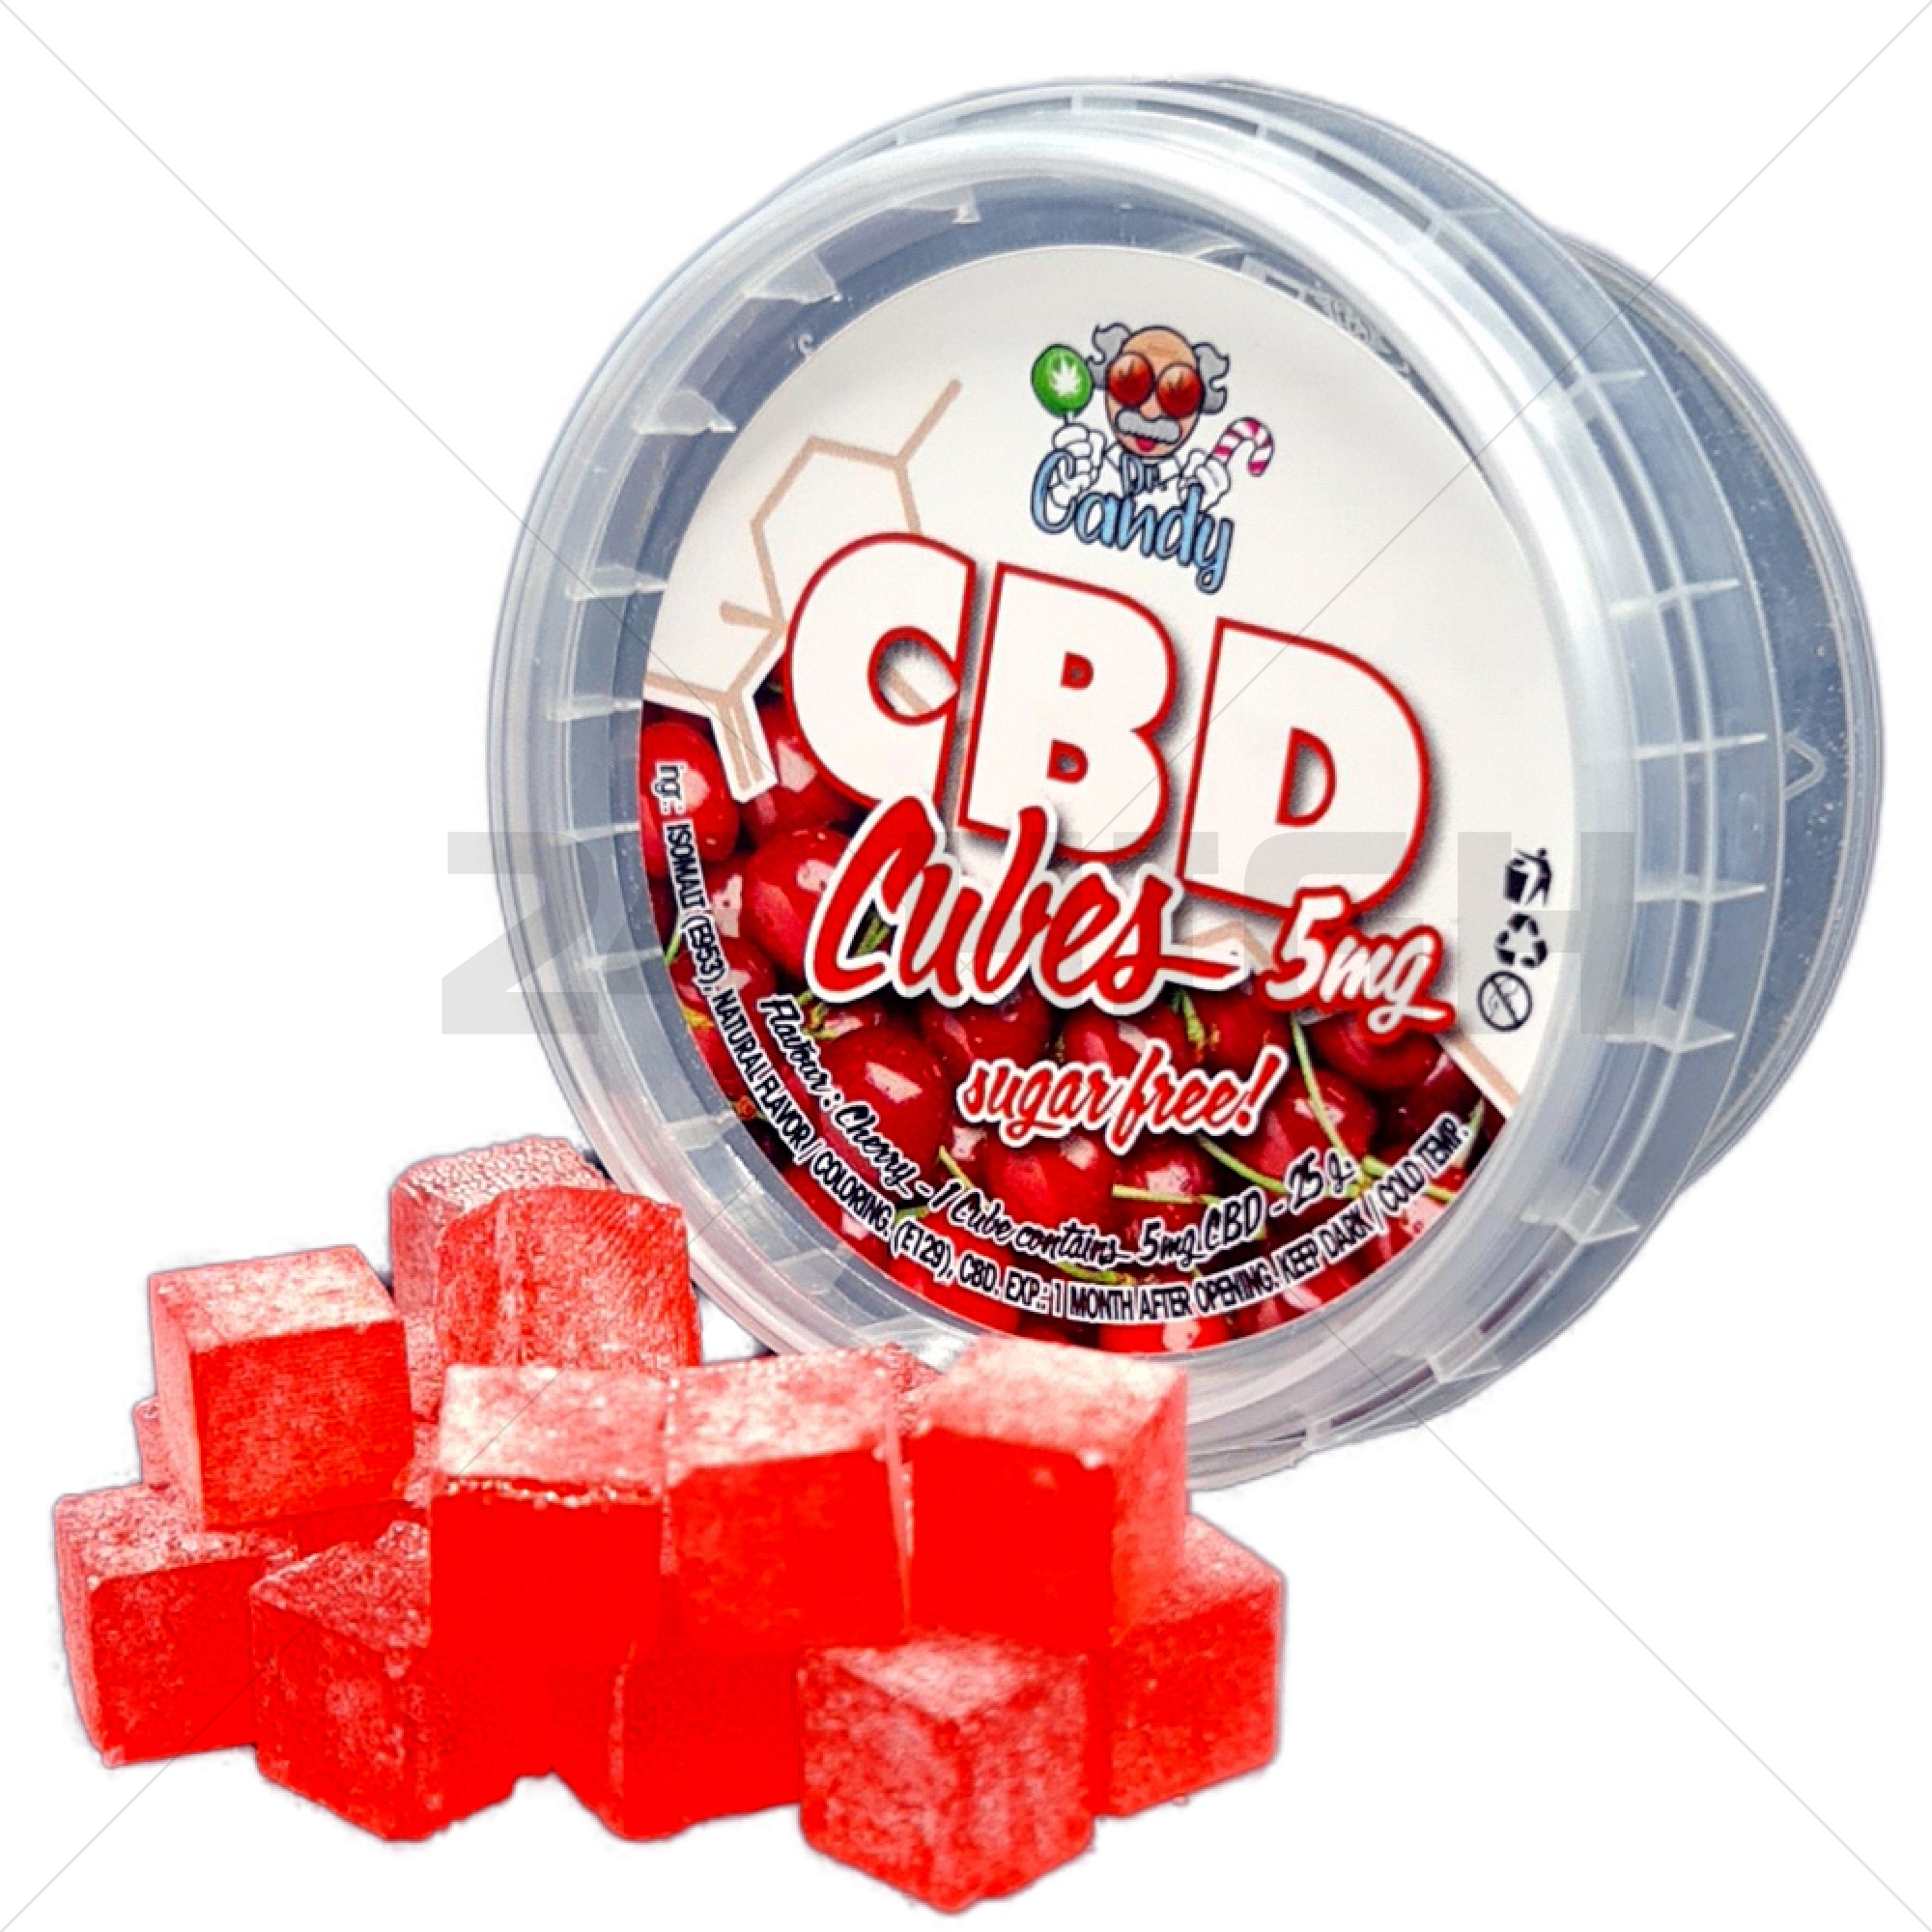 CBD Cubes - Cereza